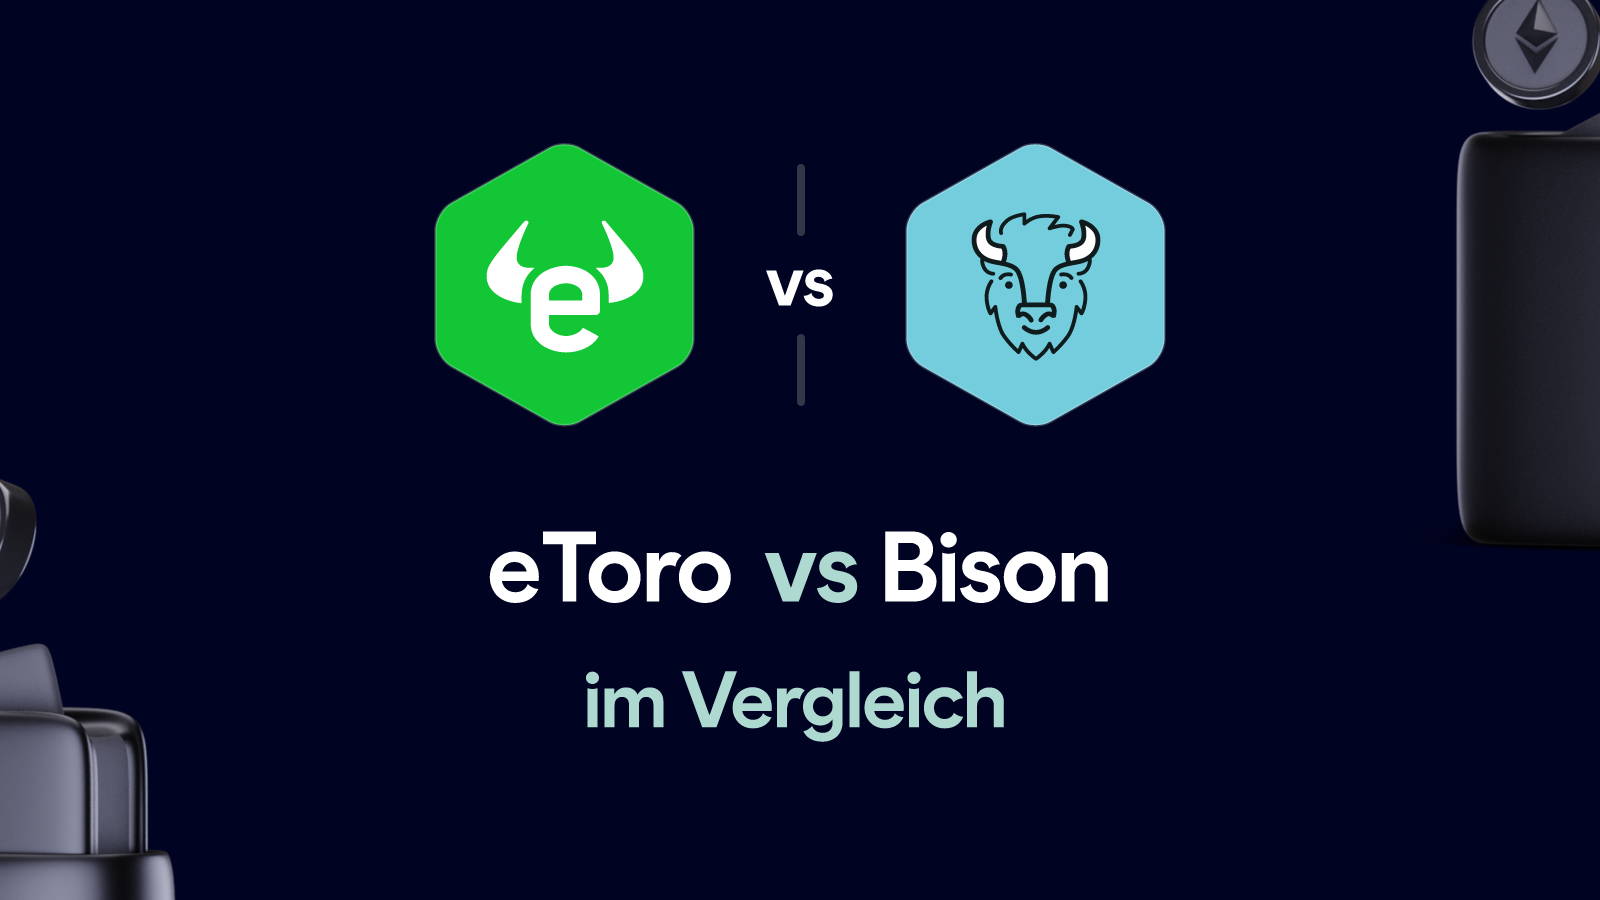 eToro vs Bison im Vergleich